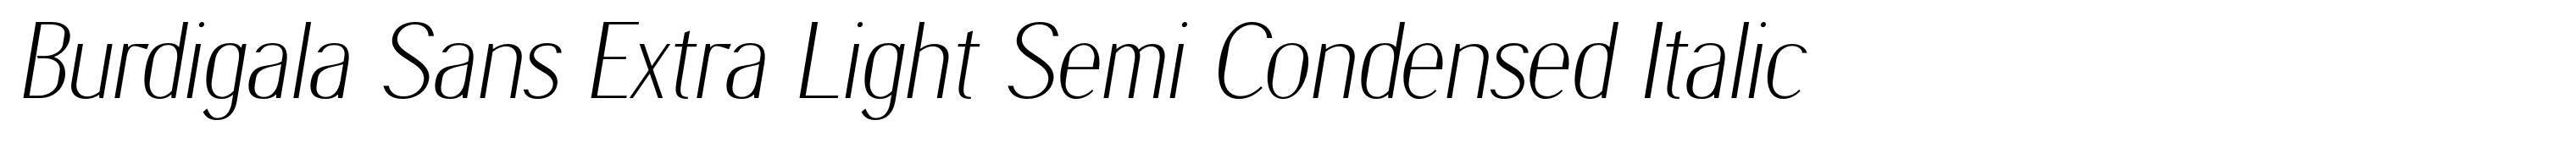 Burdigala Sans Extra Light Semi Condensed Italic